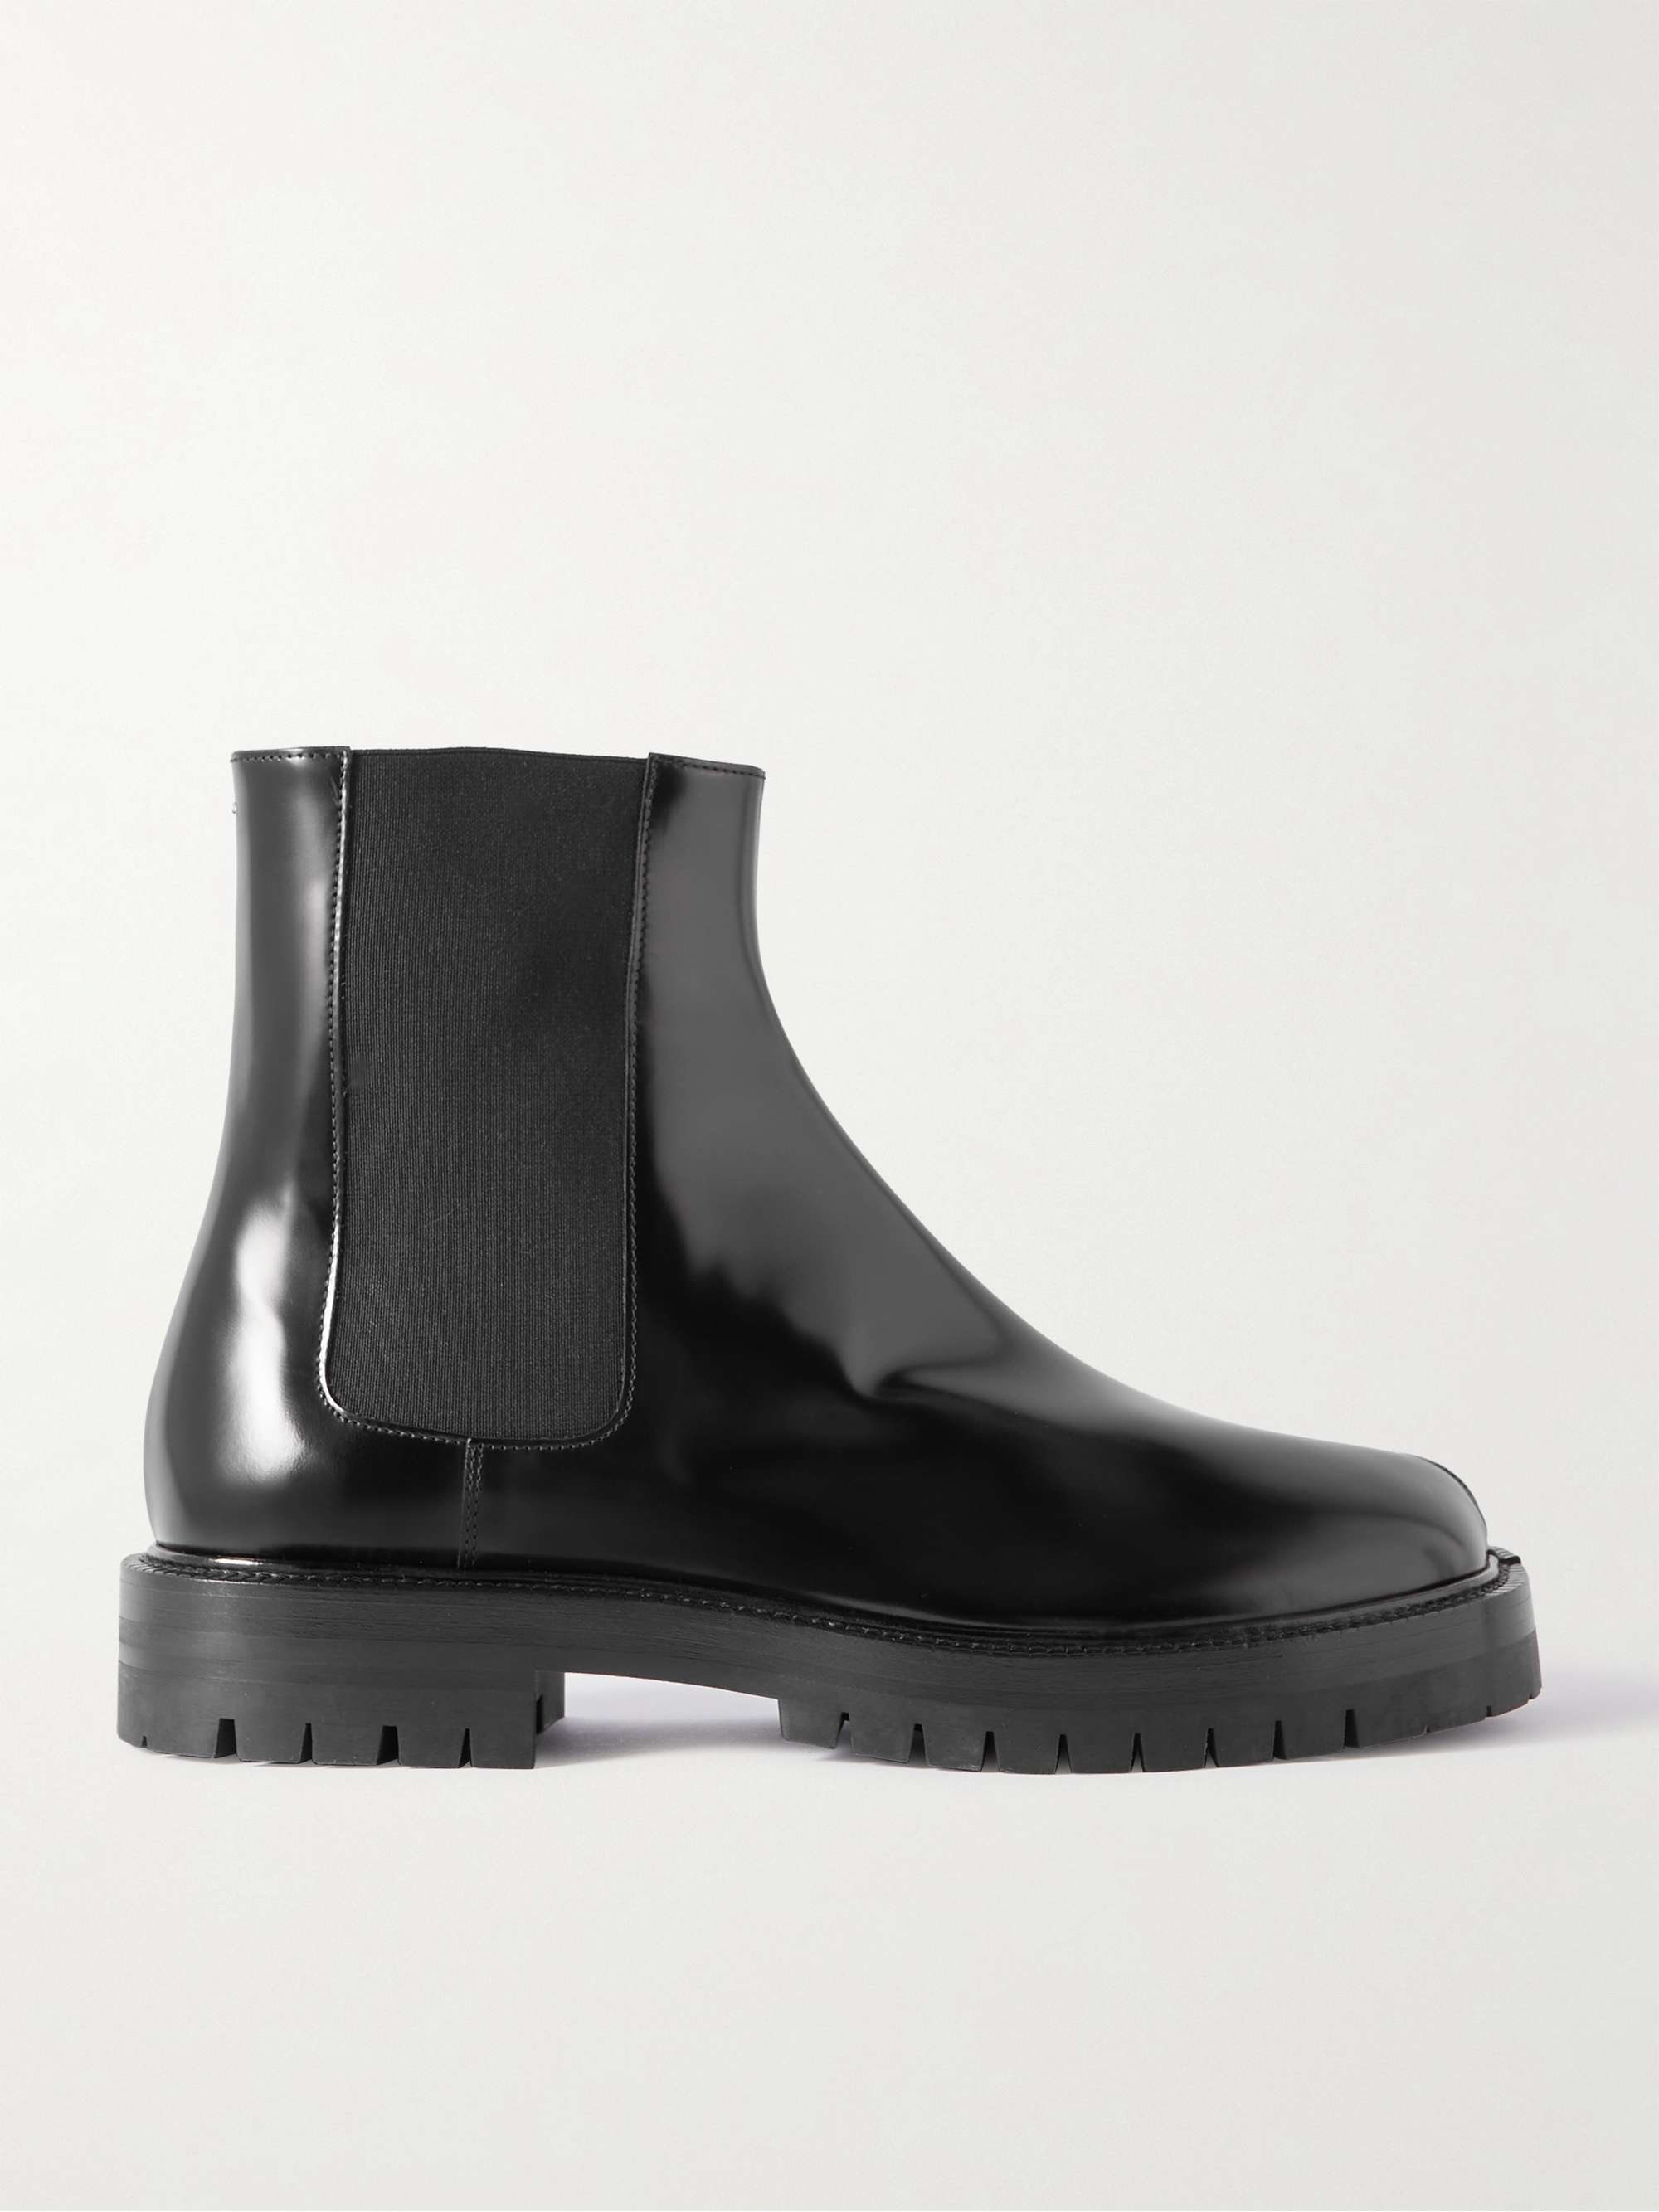 MAISON MARGIELA Tabi Patent-Leather Chelsea Boots for Men | MR PORTER